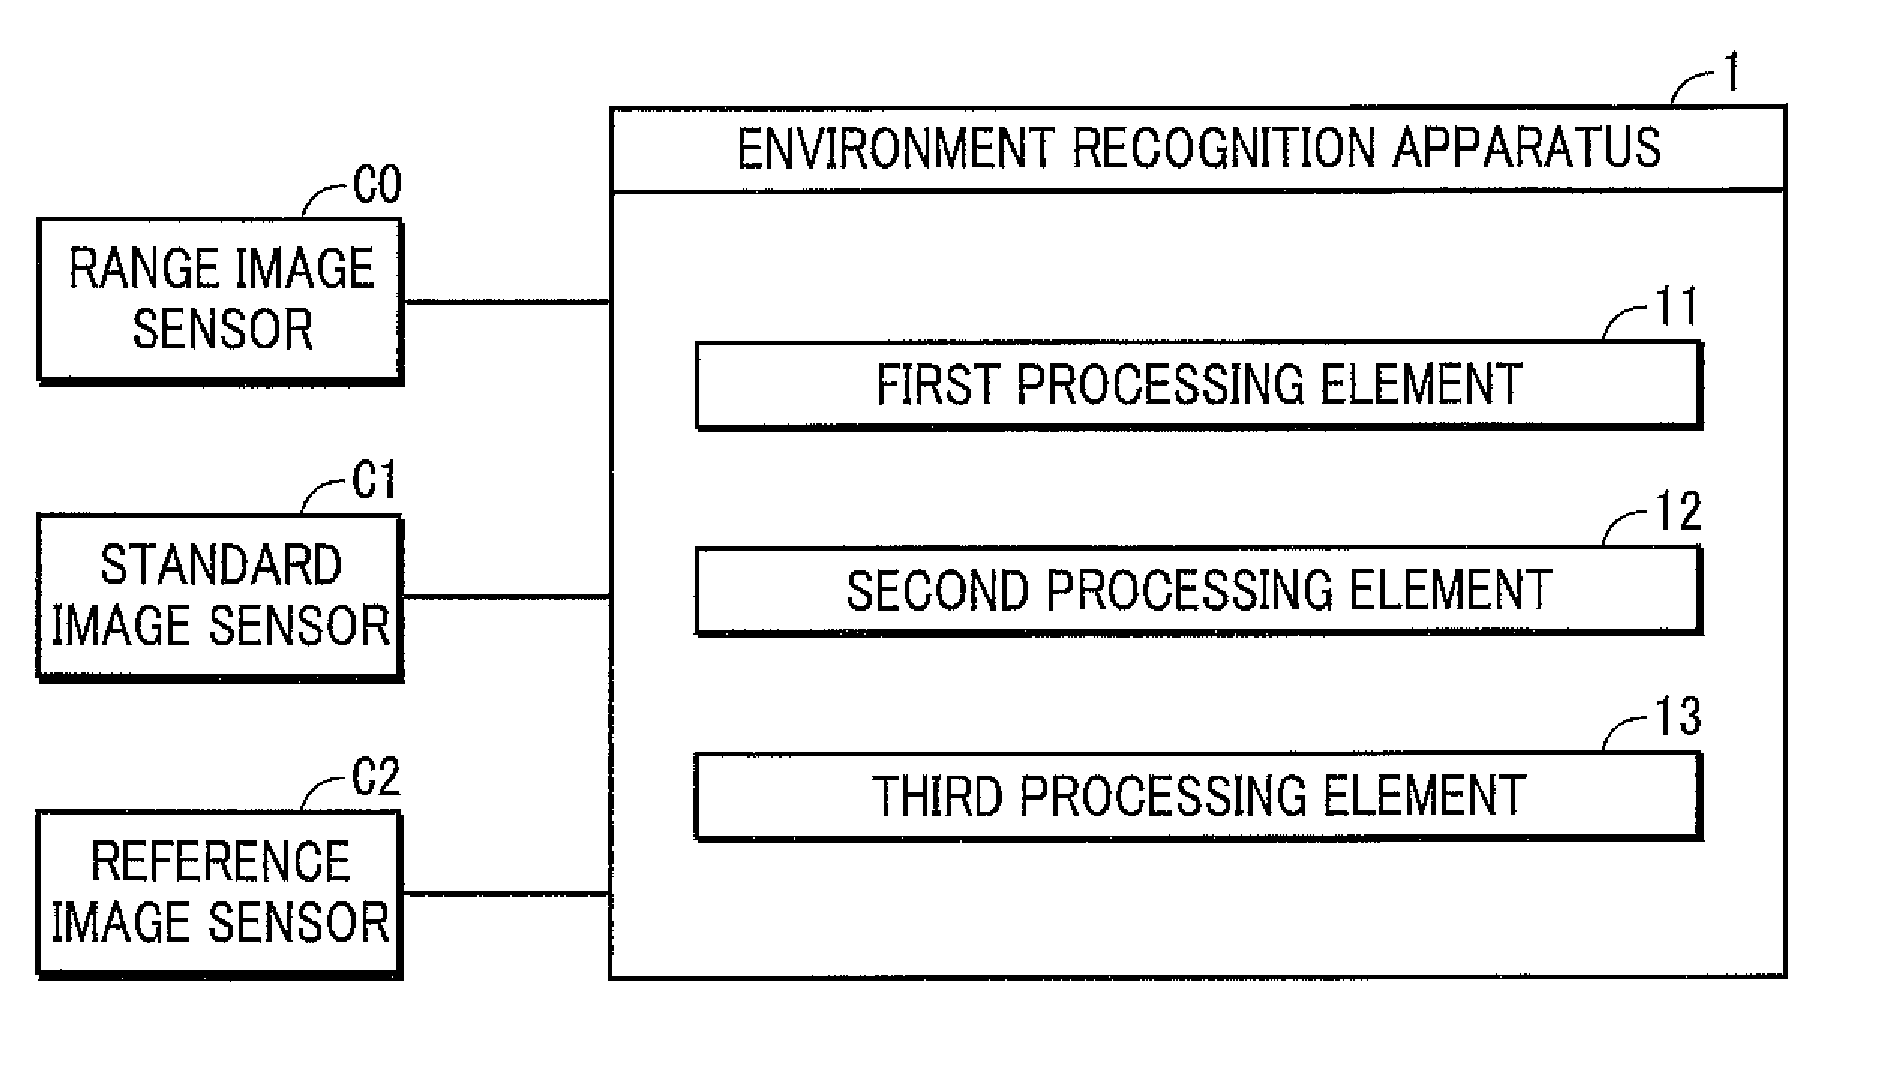 Environment recognition apparatus